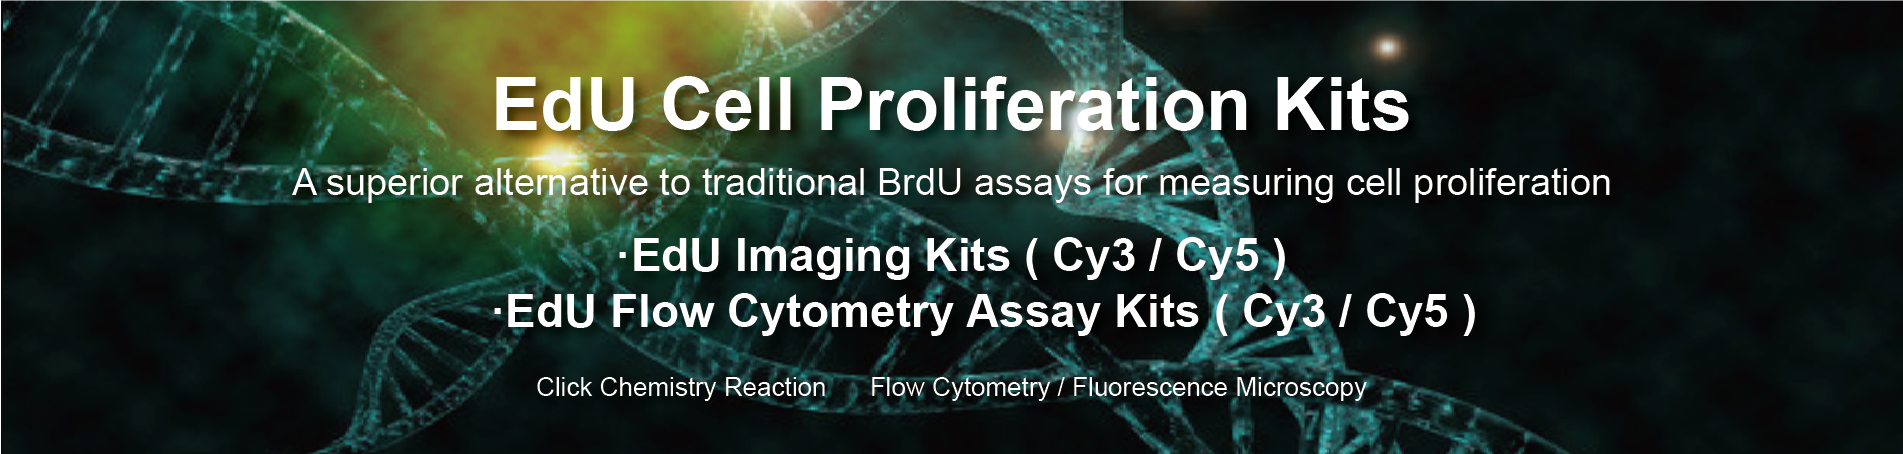 EdU Cell Proliferation Kits